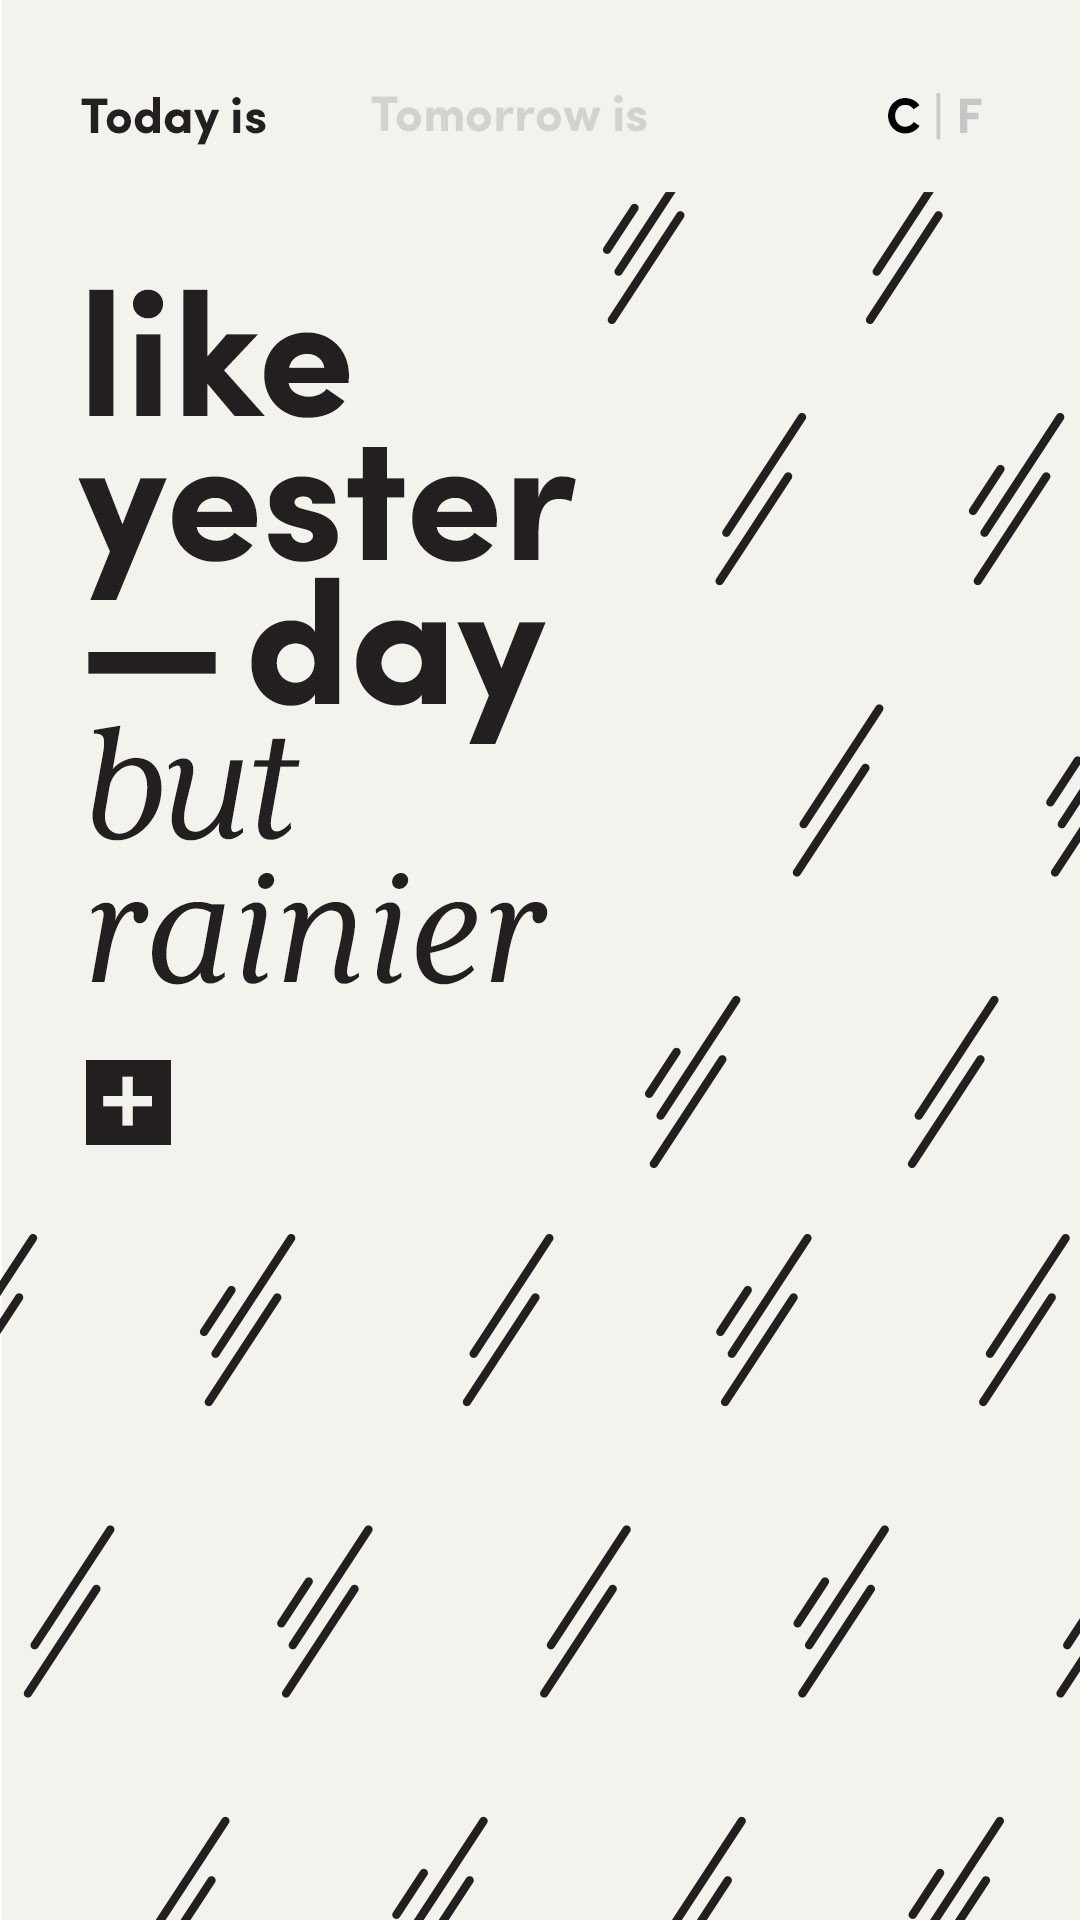 LikeYesterday_0005_but rainier